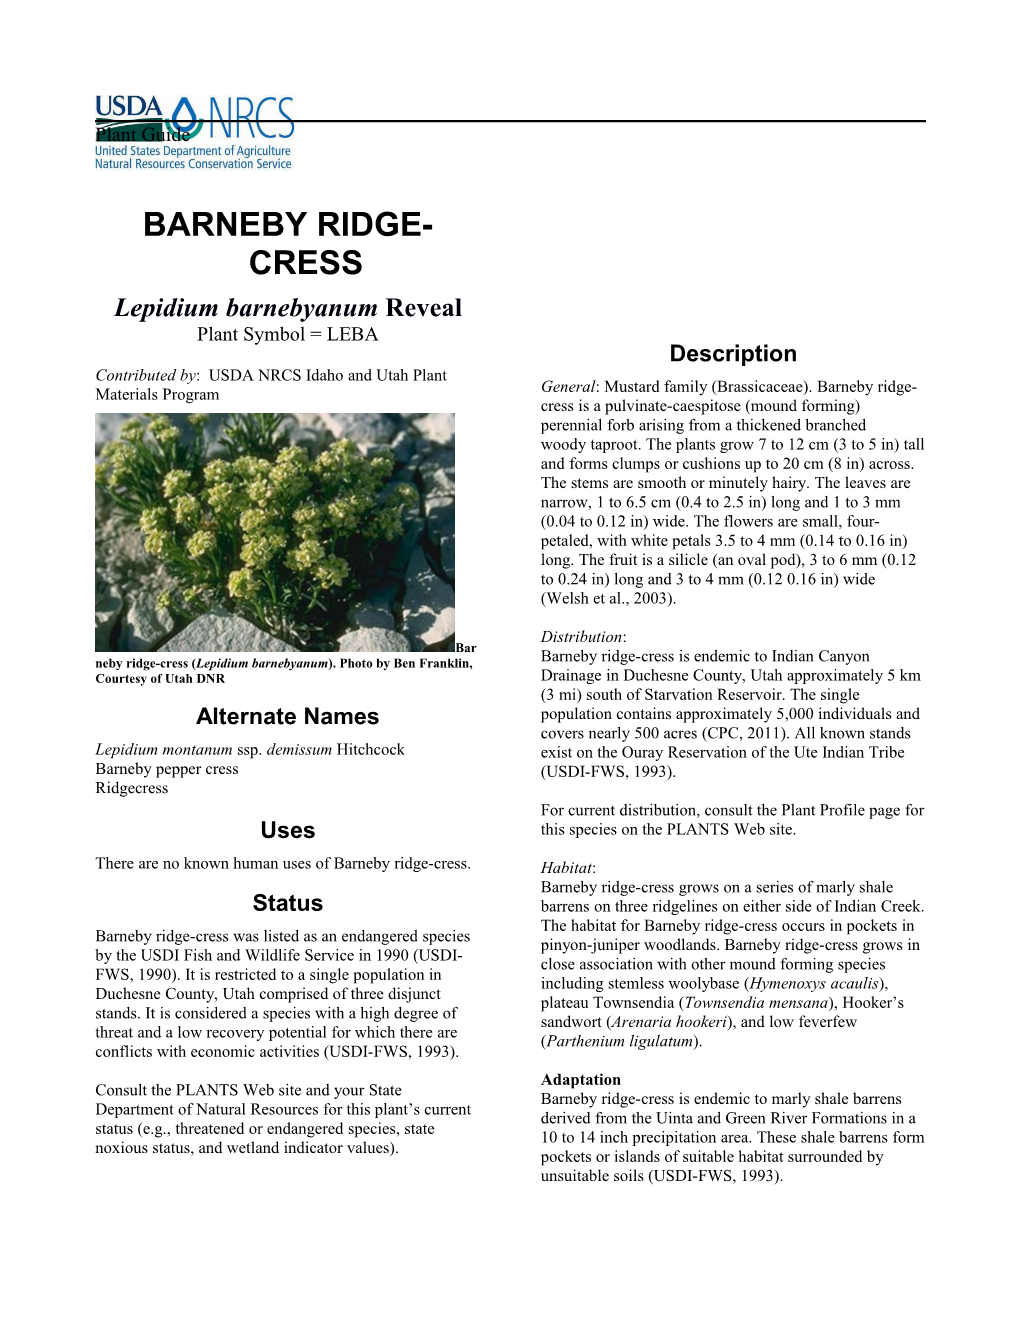 Plant Guide for Barneby Ridge-Cress (Lepidium Barnebyanum)